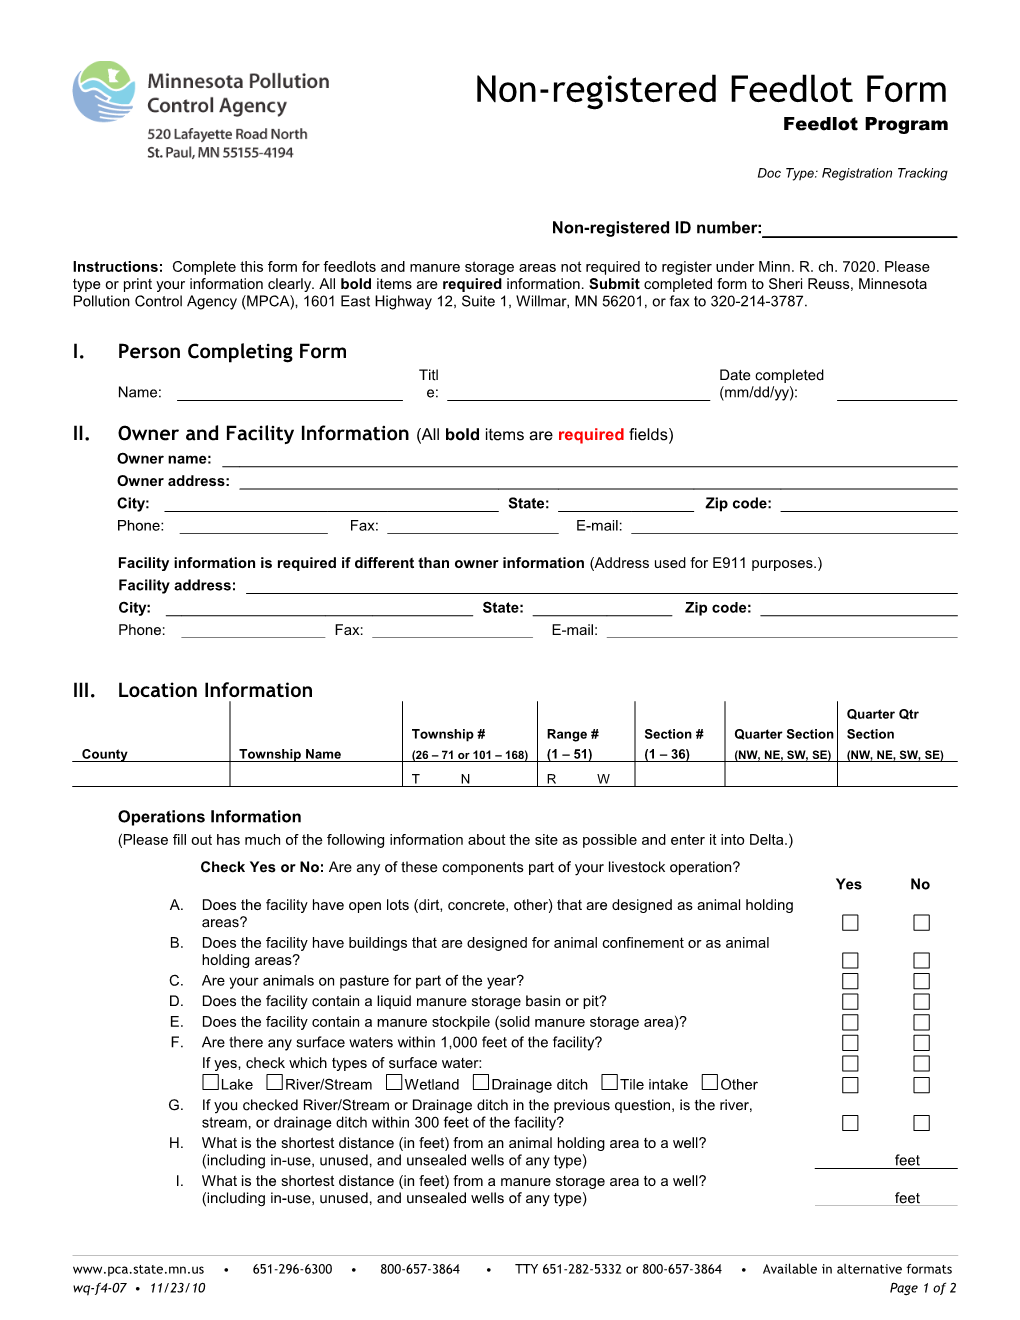 Non-Registered Feedlot Form - Form